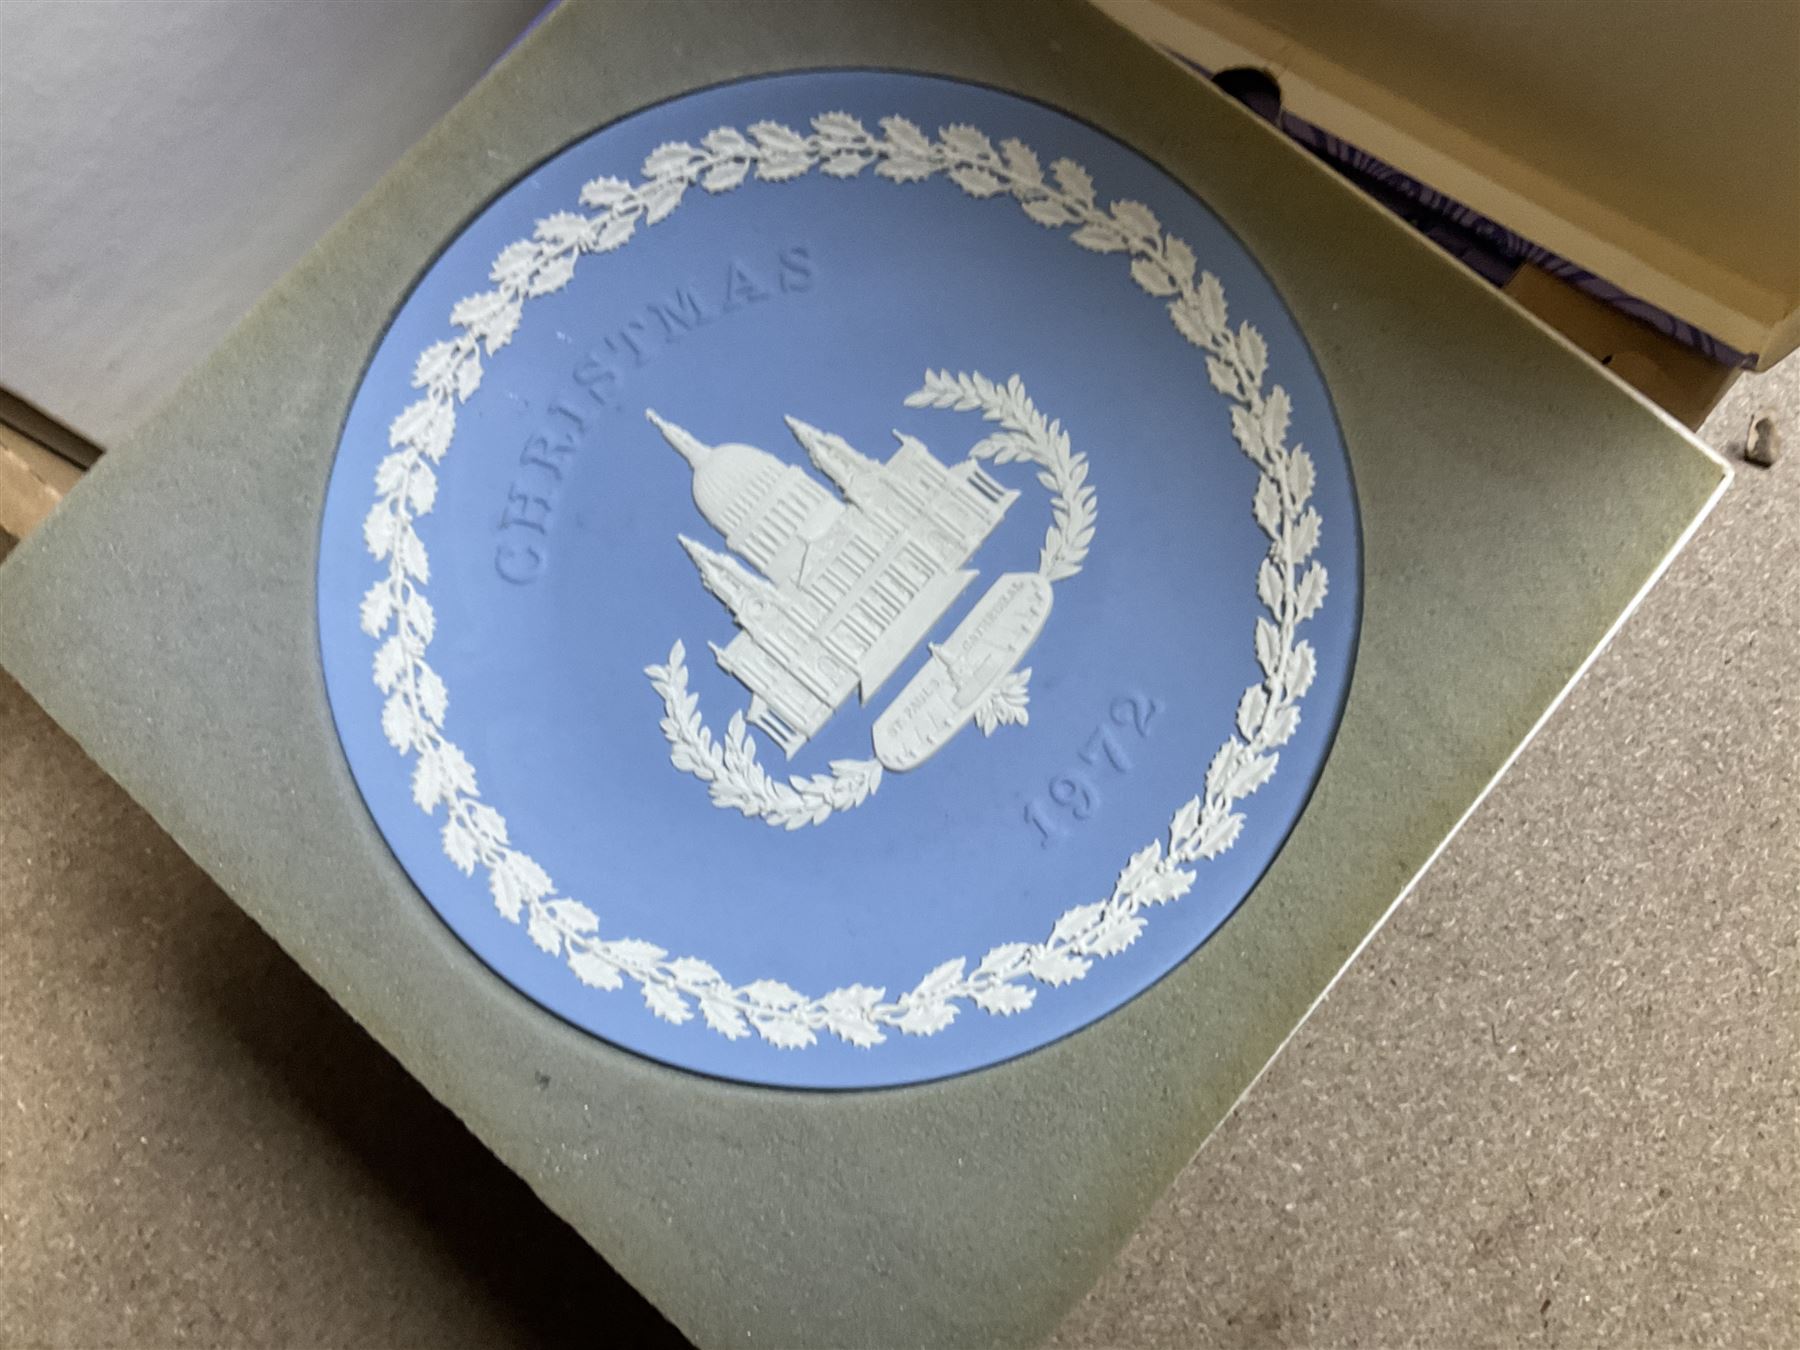 Wedgwood Jasperware Christmas collectors plates to include London Landmarks - Image 3 of 5